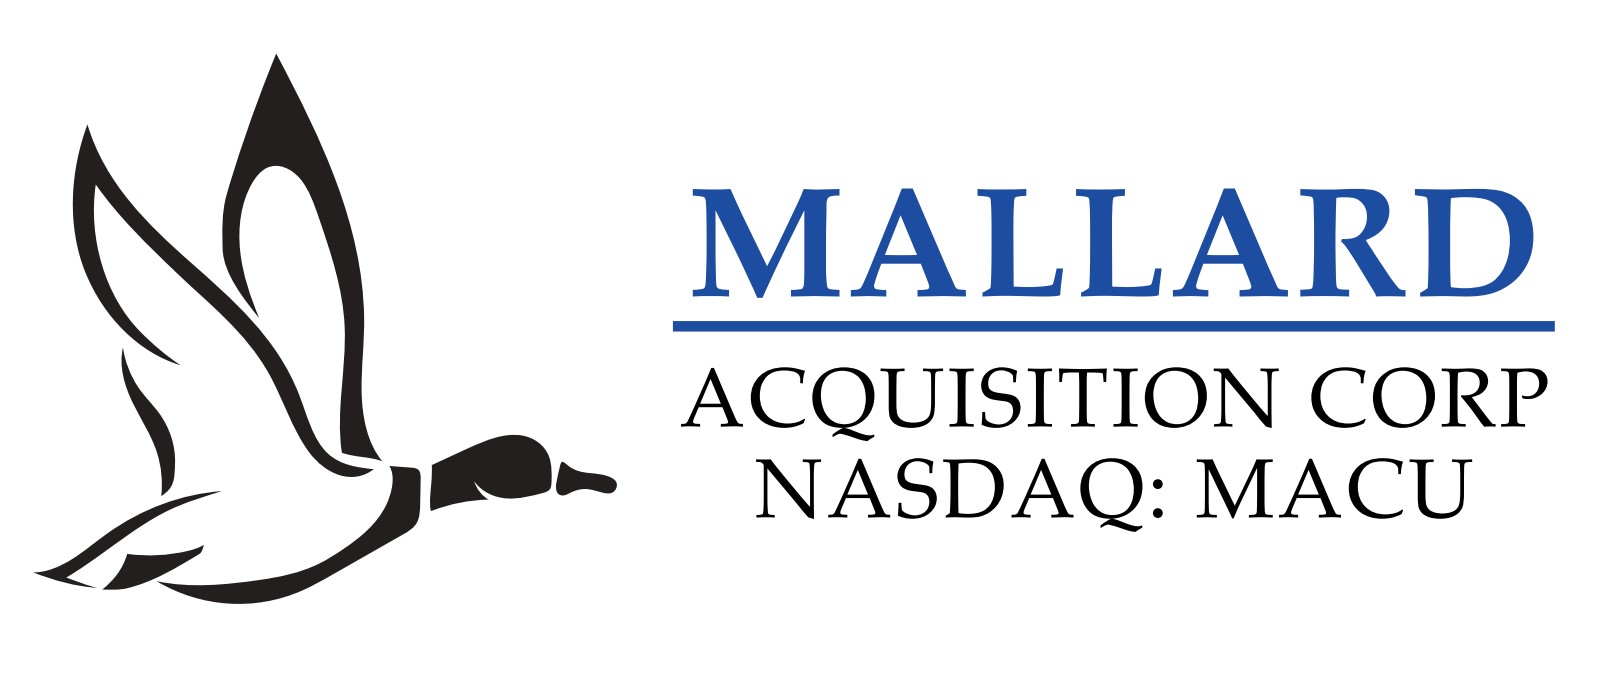 Mallard Acquisition Corp Logo .jpg